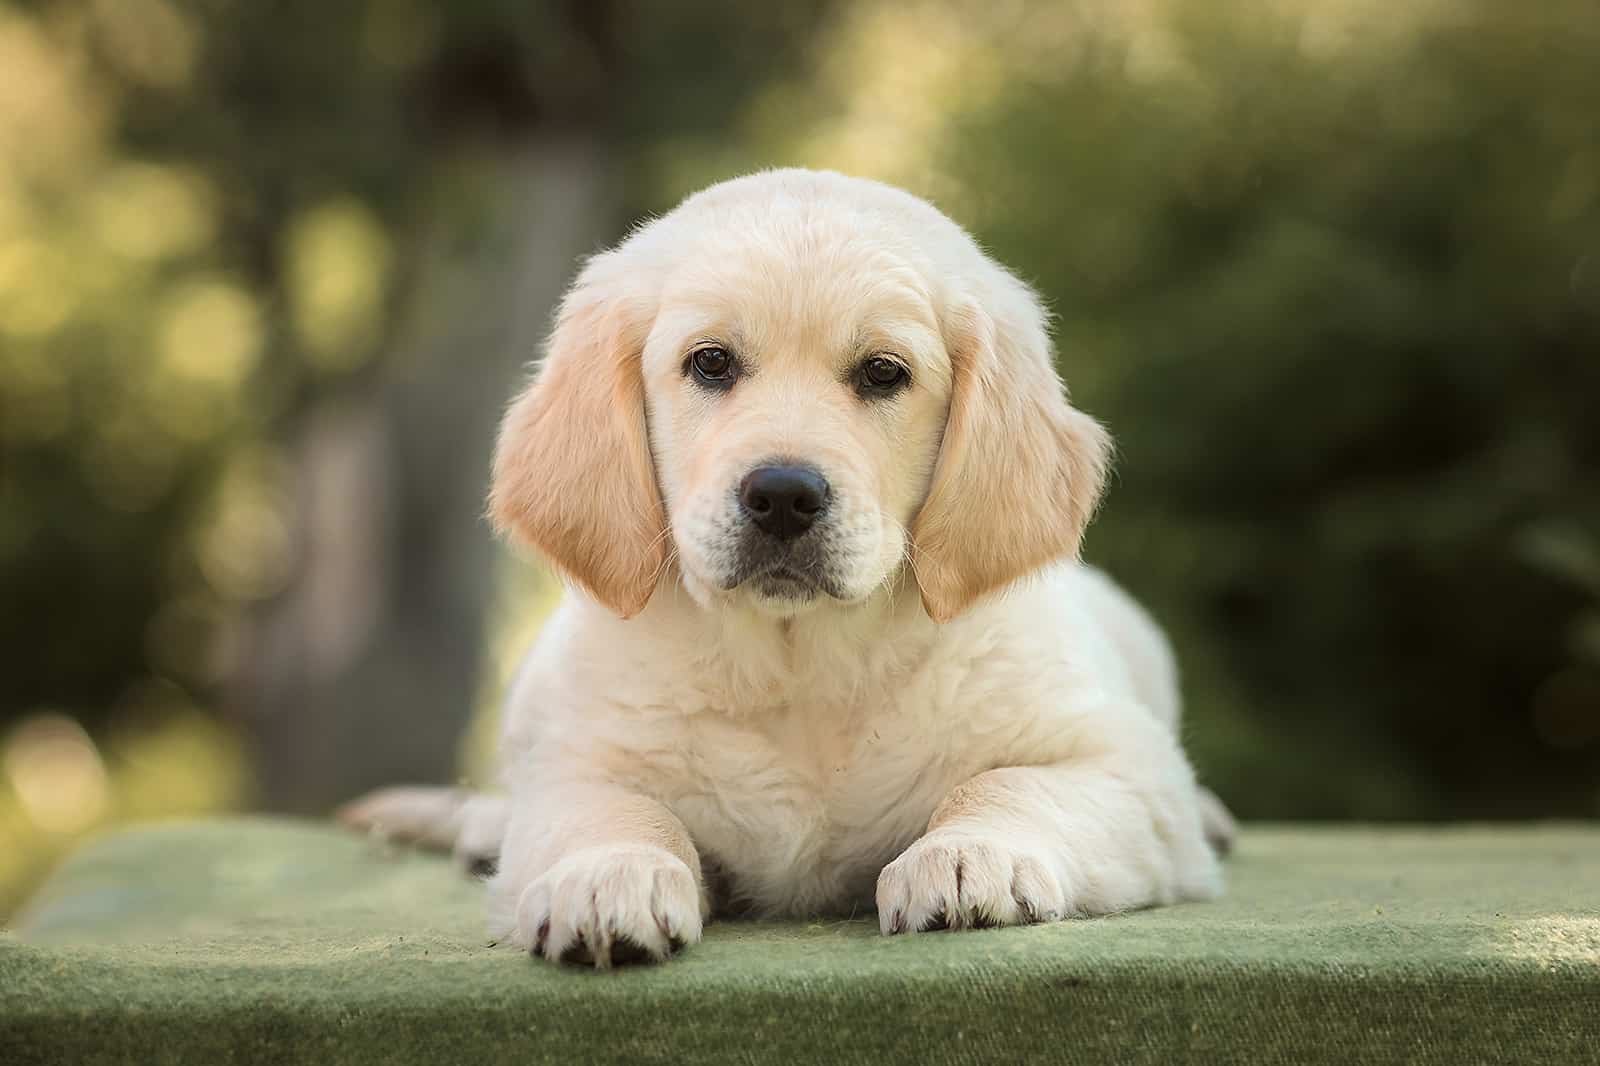 puppy golden retriever sitting outdoors